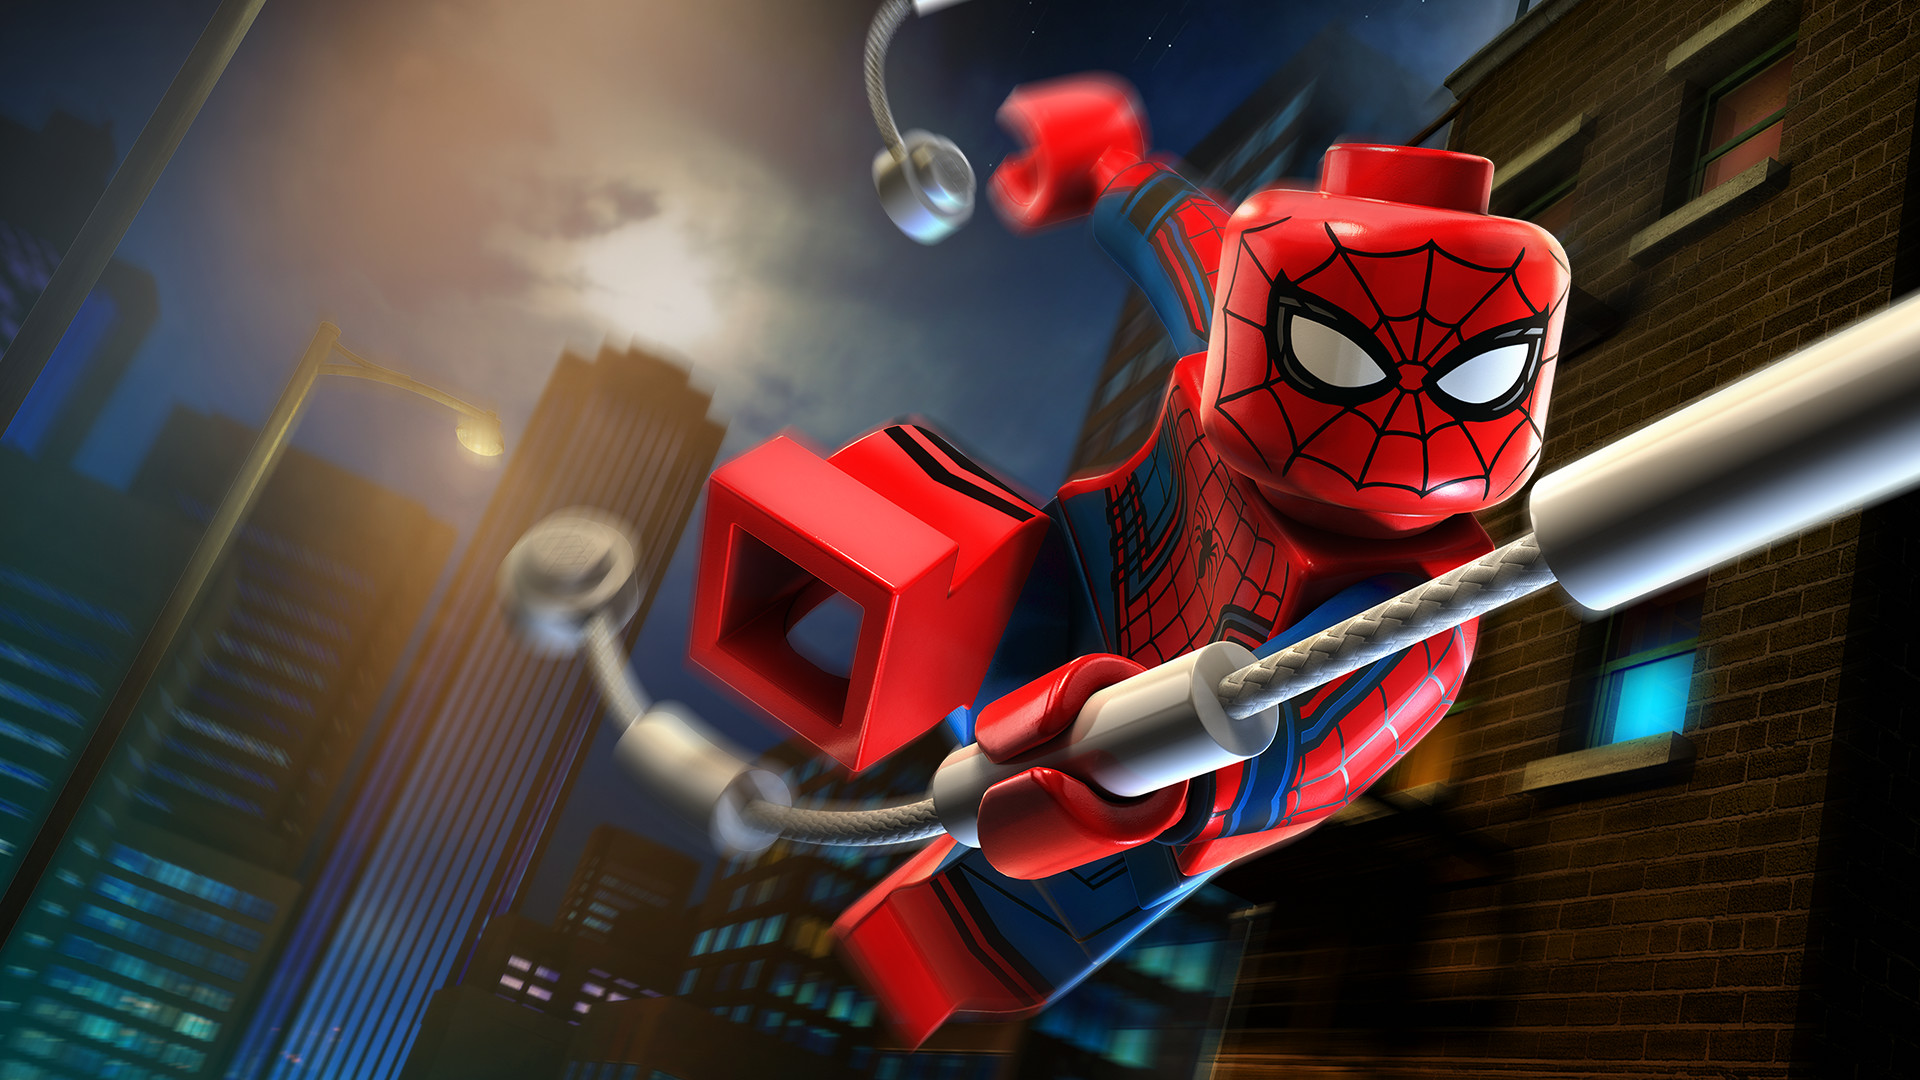 lego marvel superheroes spiderman commercial